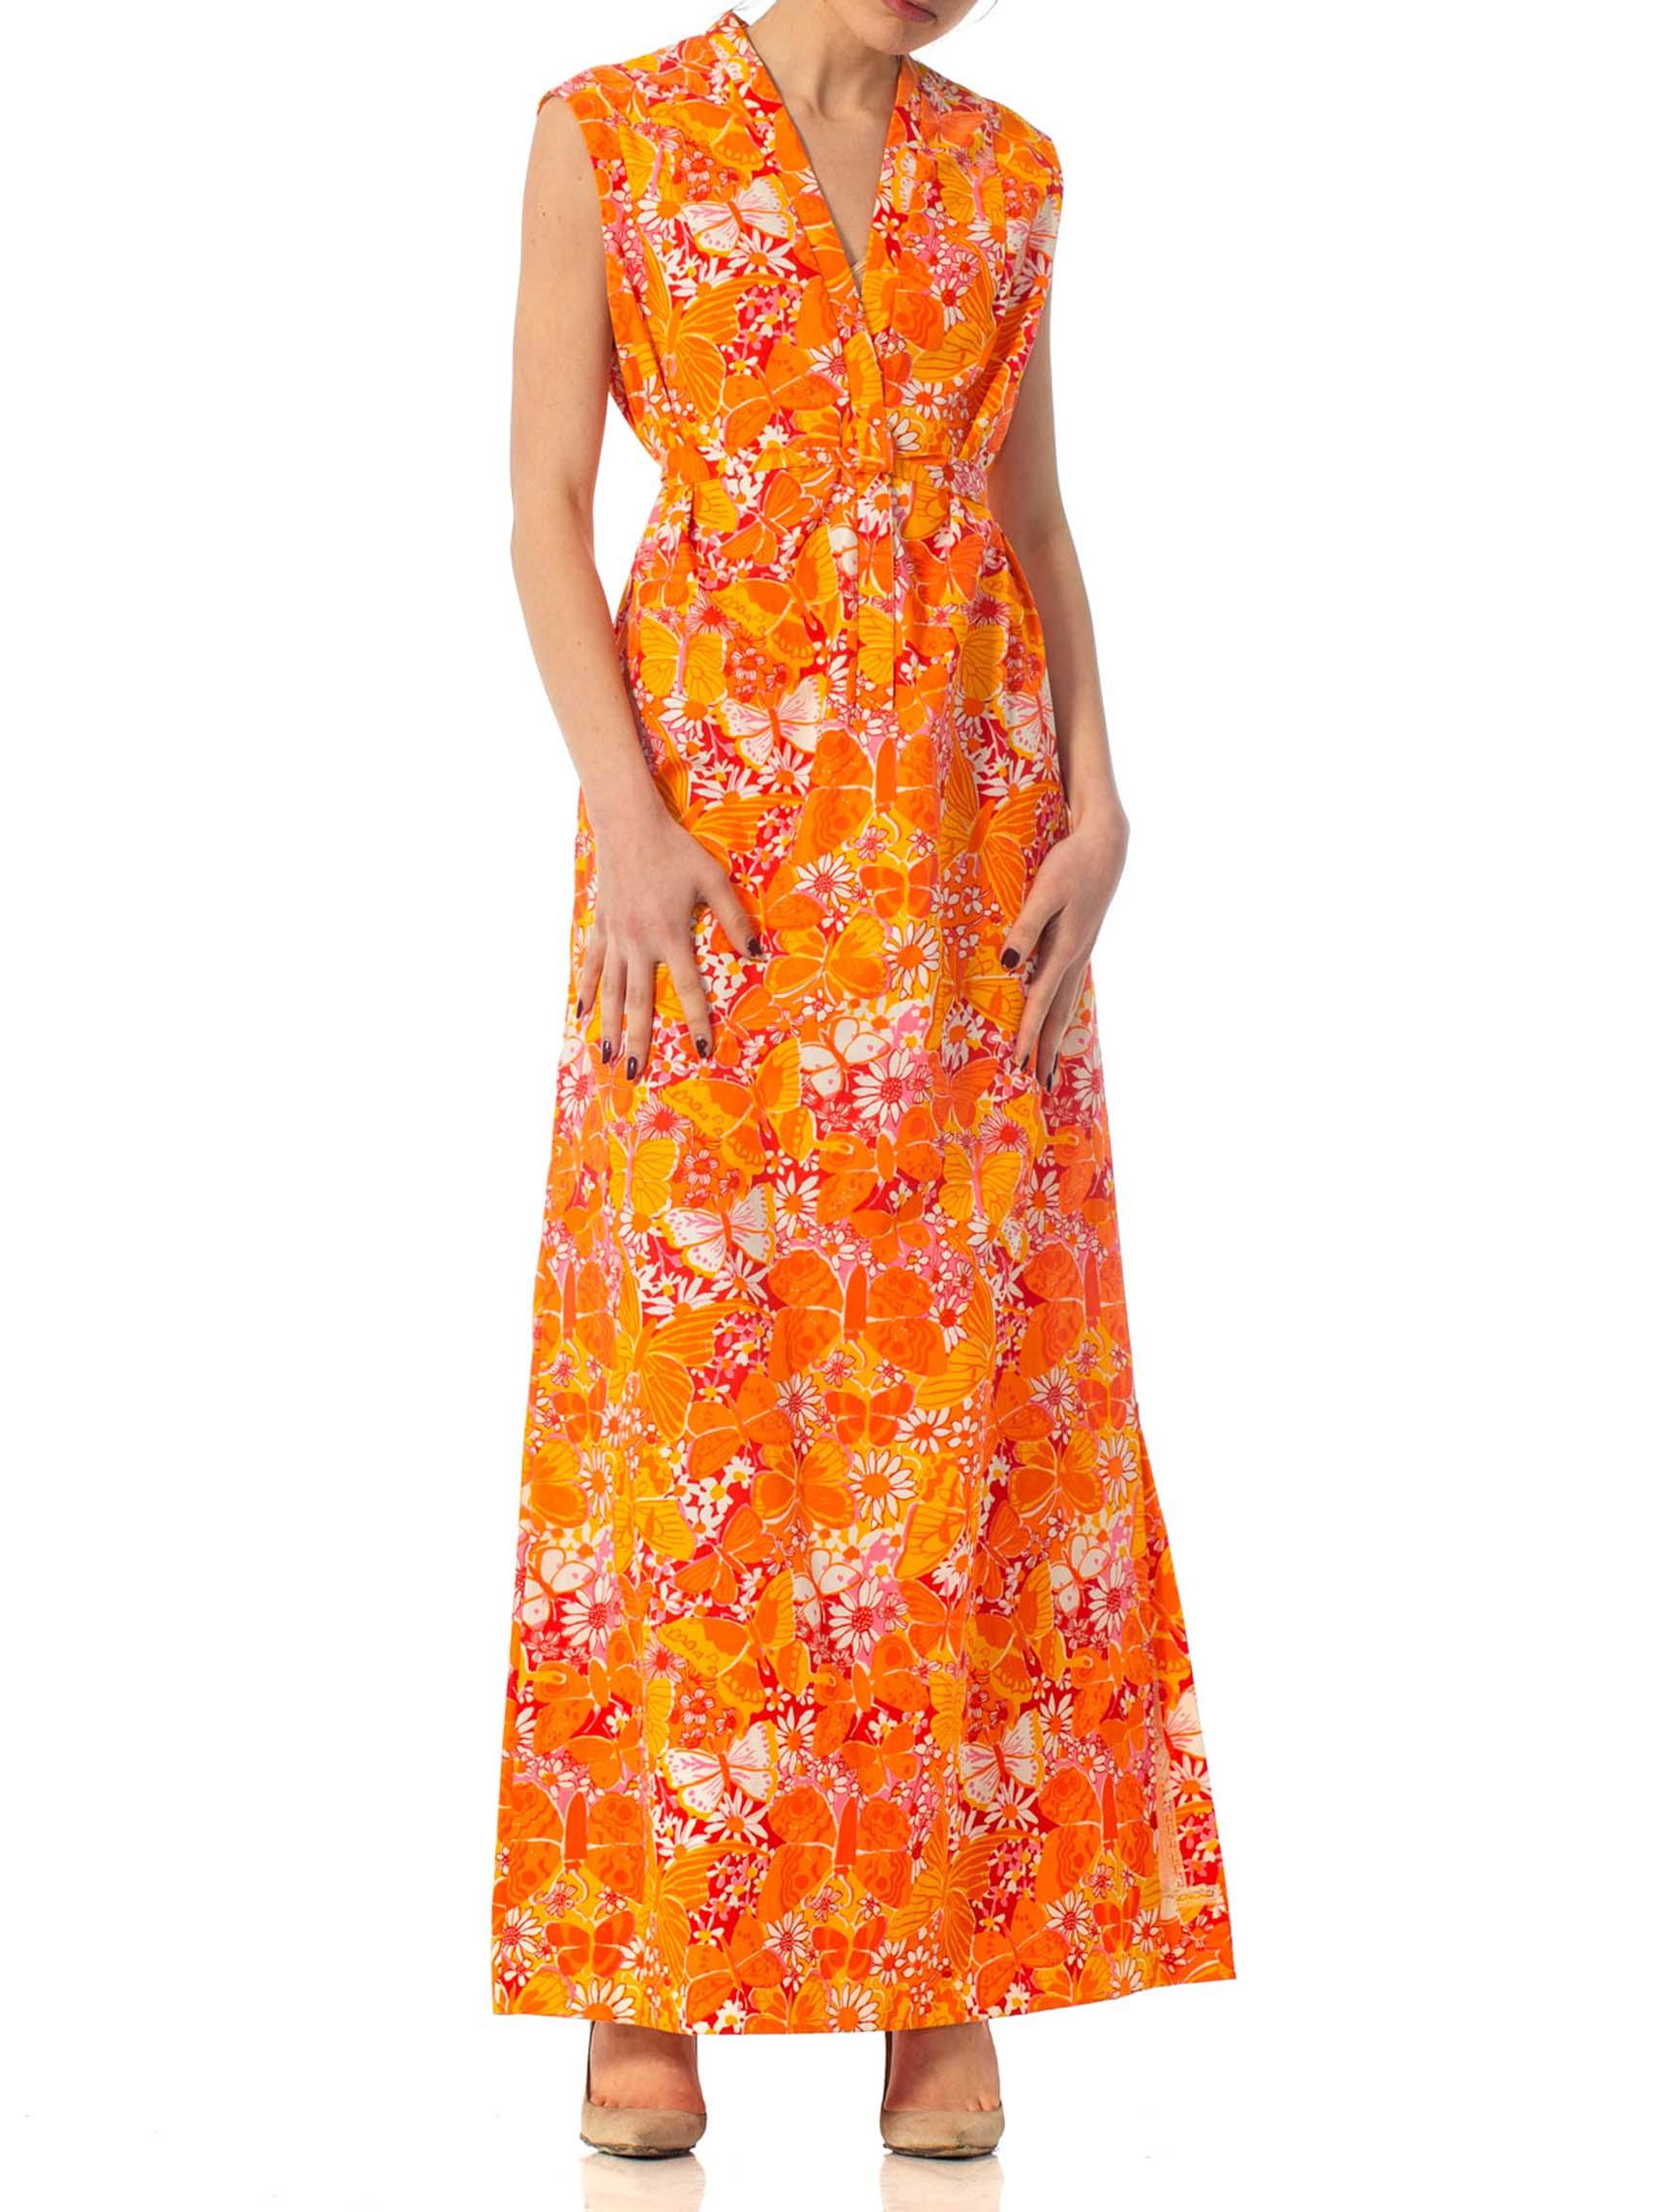 orange lilly pulitzer dress